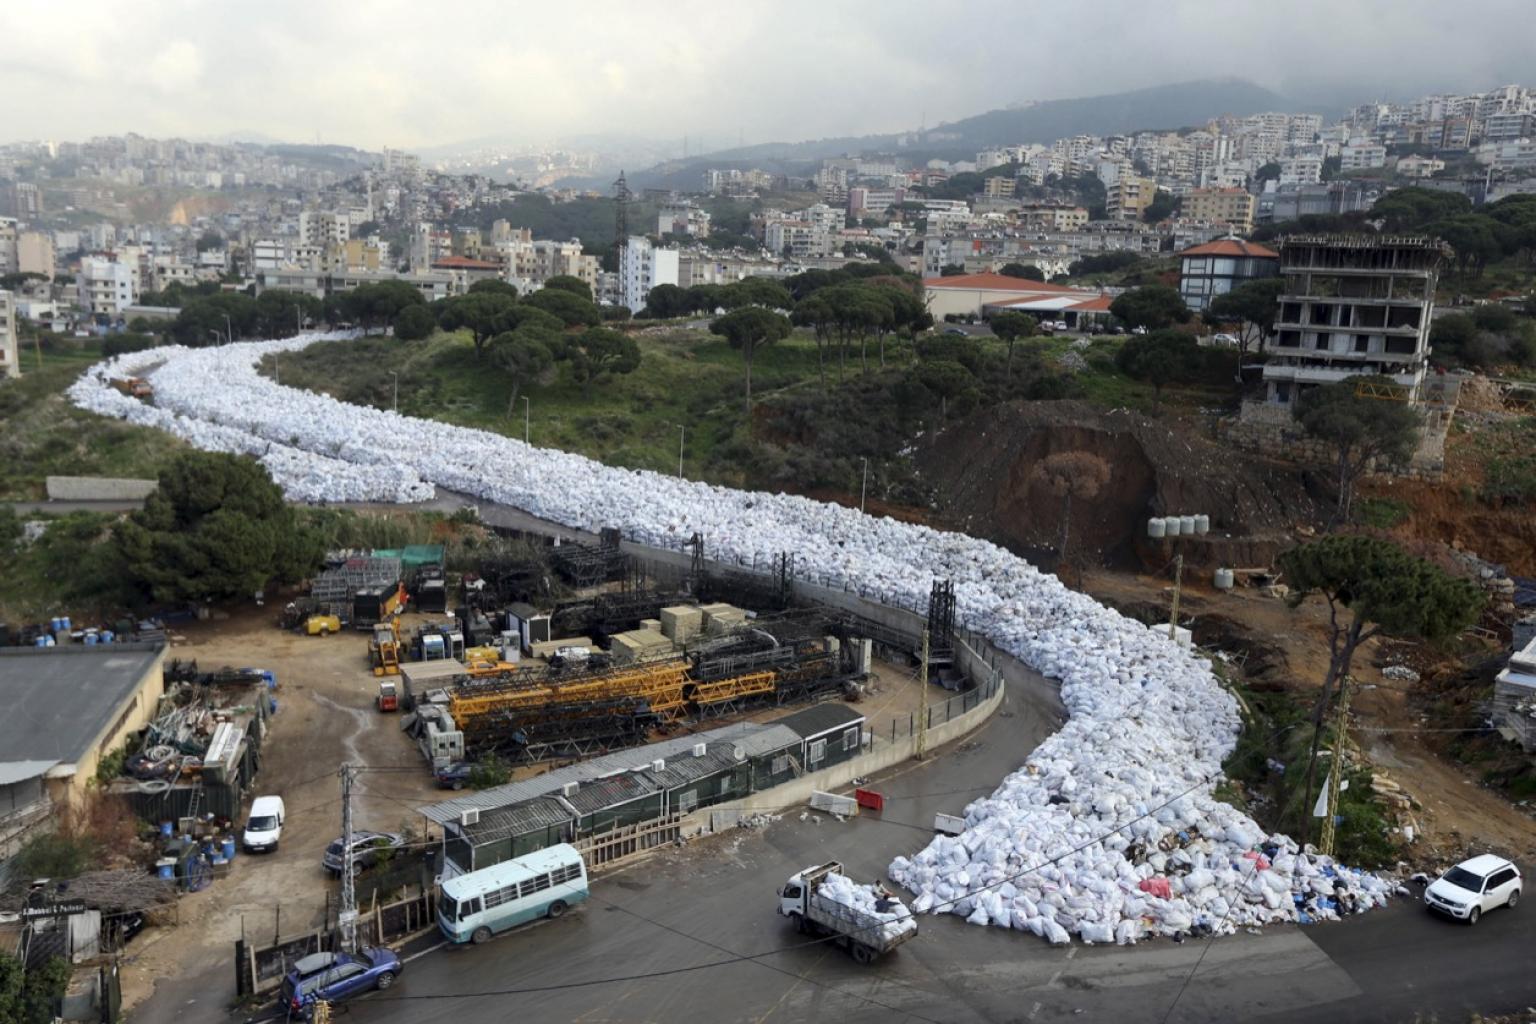 Packed garbage bags in Jdeideh, Beirut, Lebanon on Feb. 23.